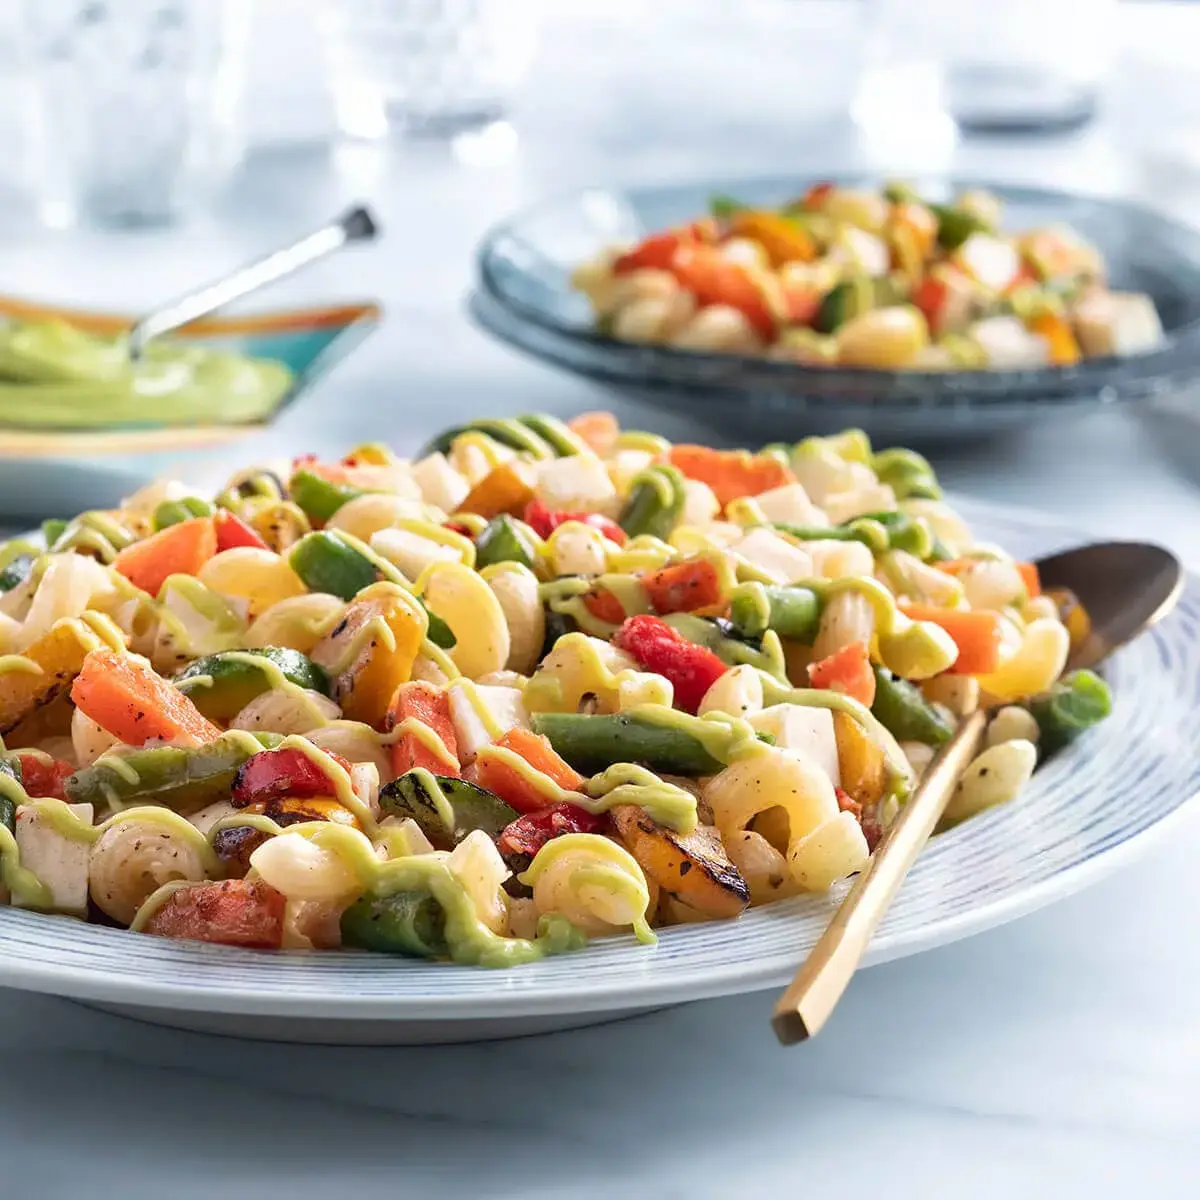 Mediterranean Pasta Salad with Avocado Dressing Recipe Card